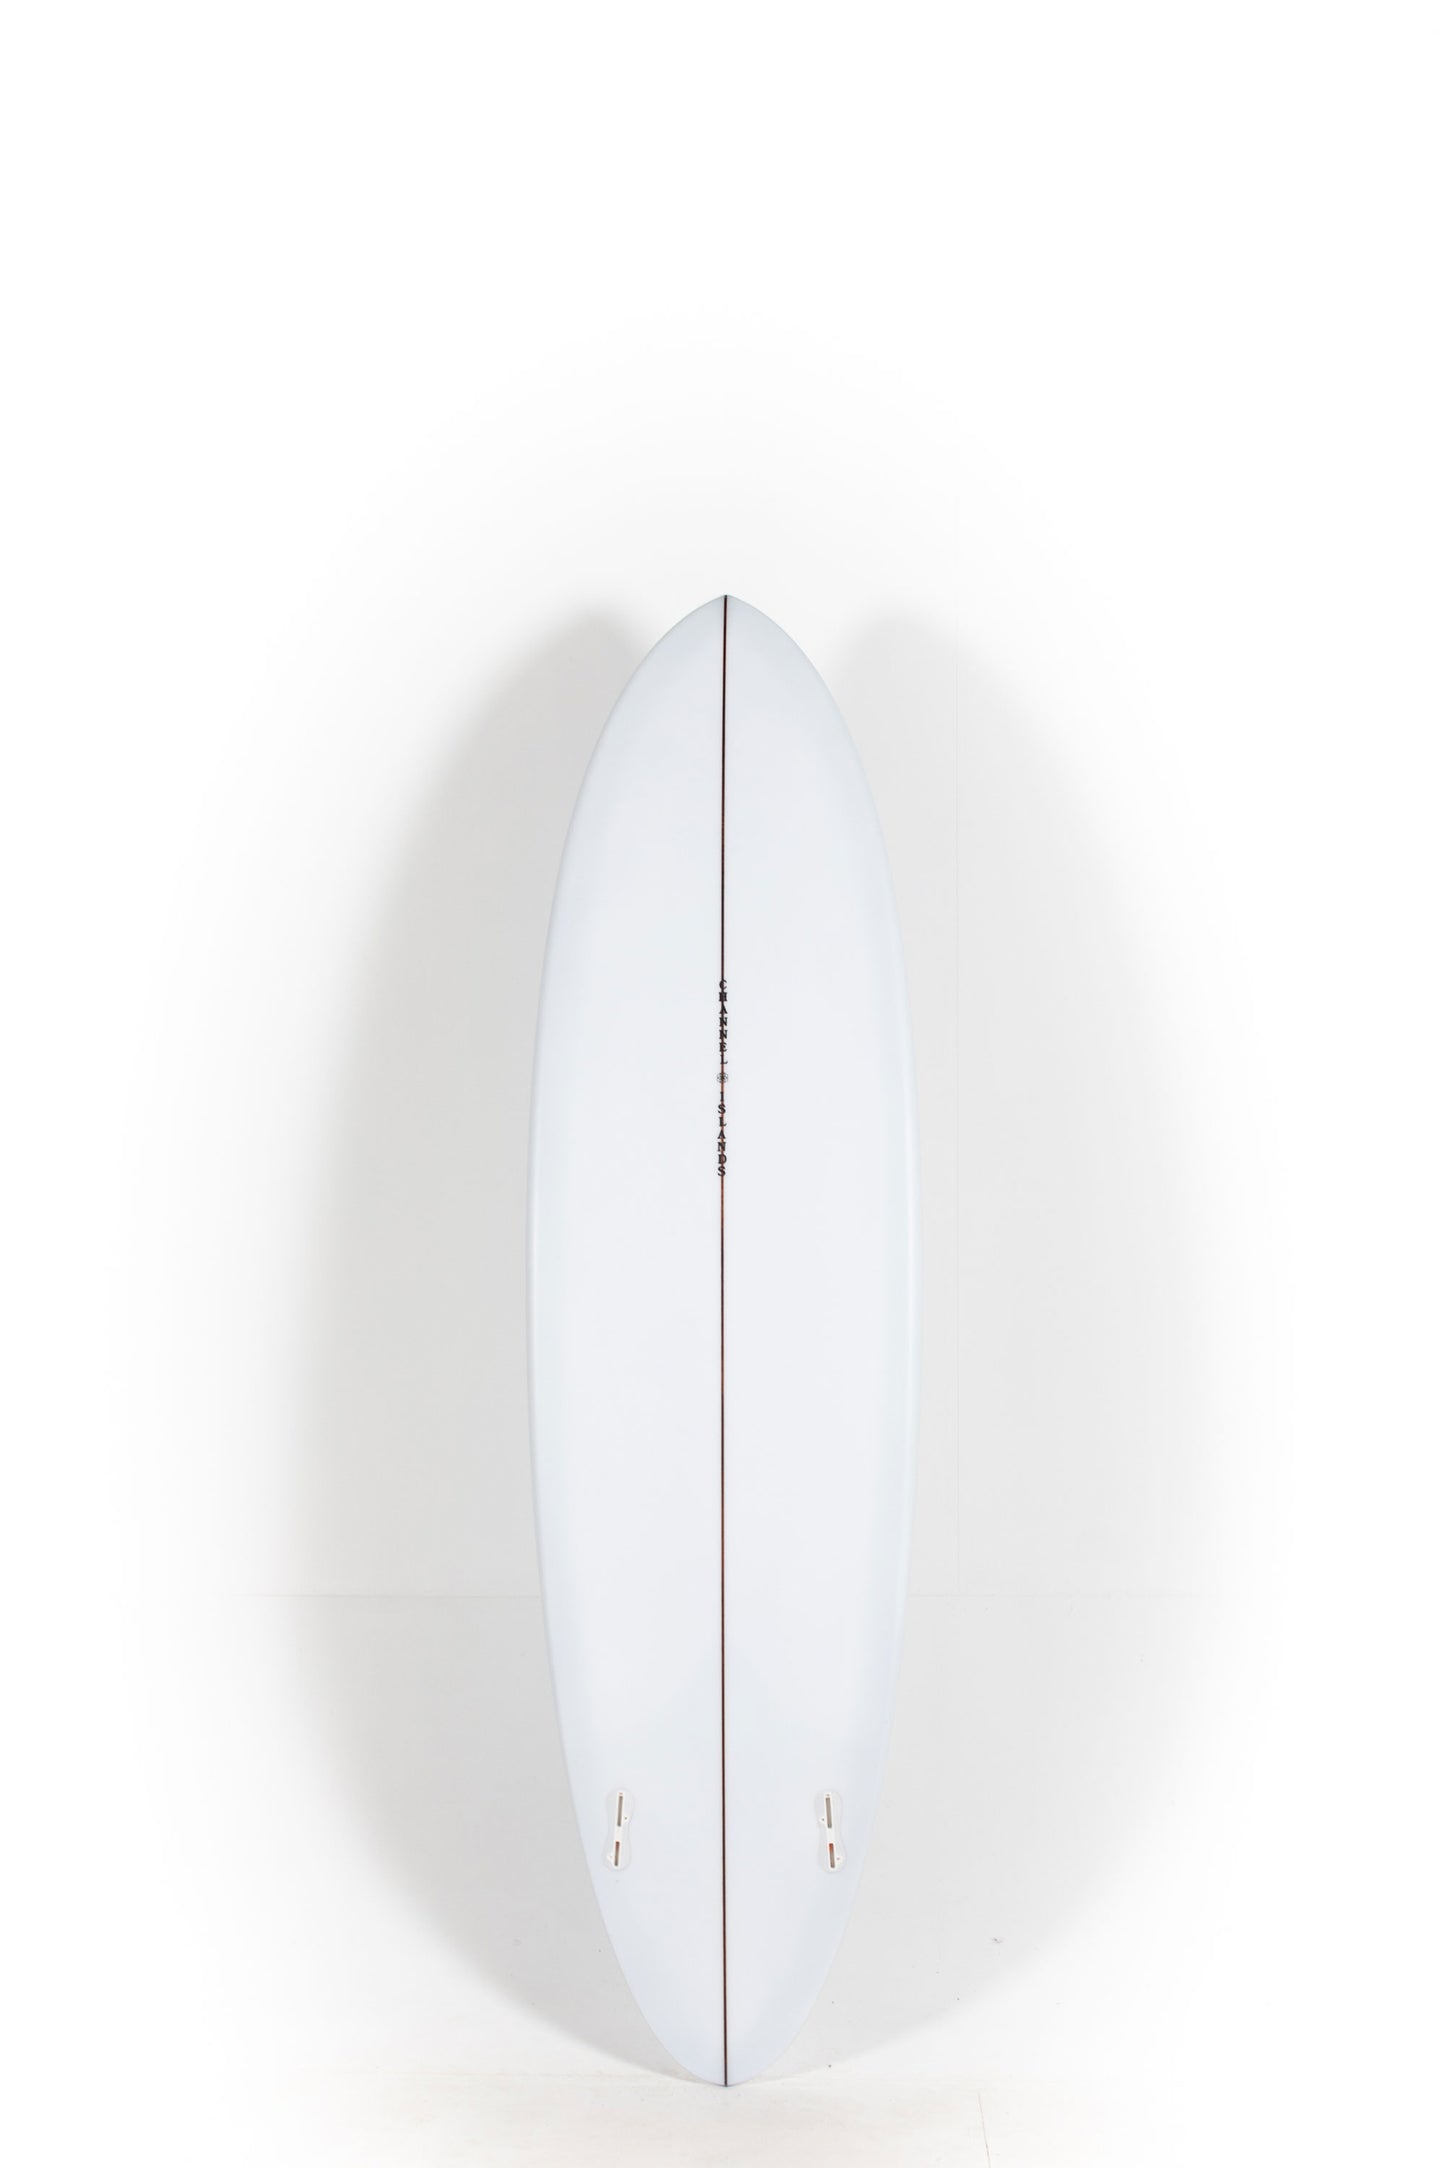 Pukas-Surf-Shop-Channel-Island-Surfboards-CI-Mid-Twin-Al-Merrick